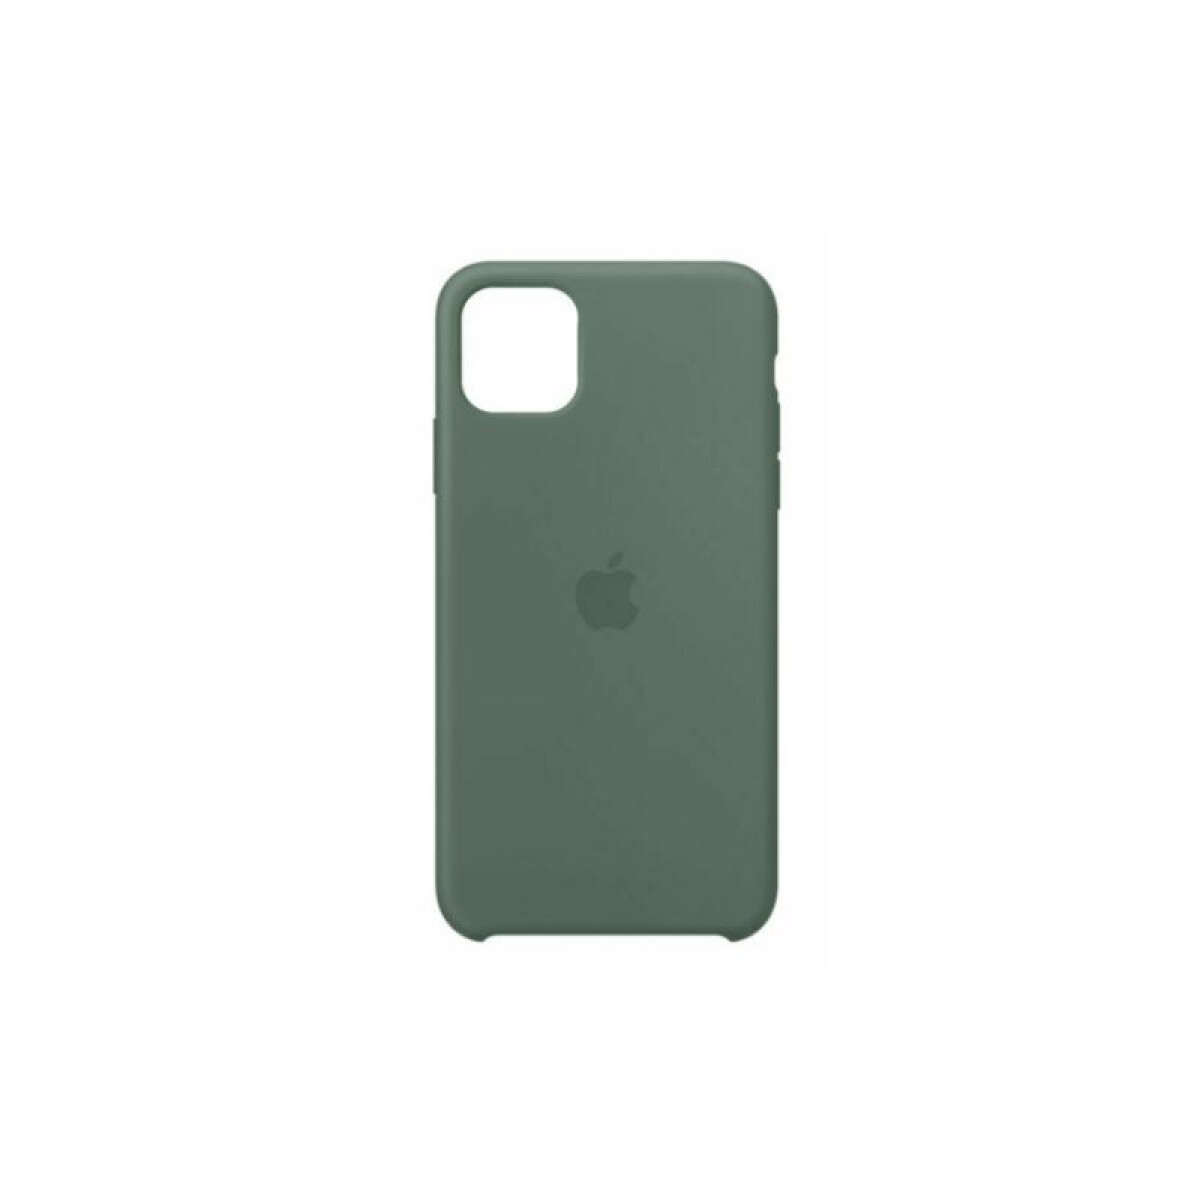 Protector original Apple para Iphone 11 verde 